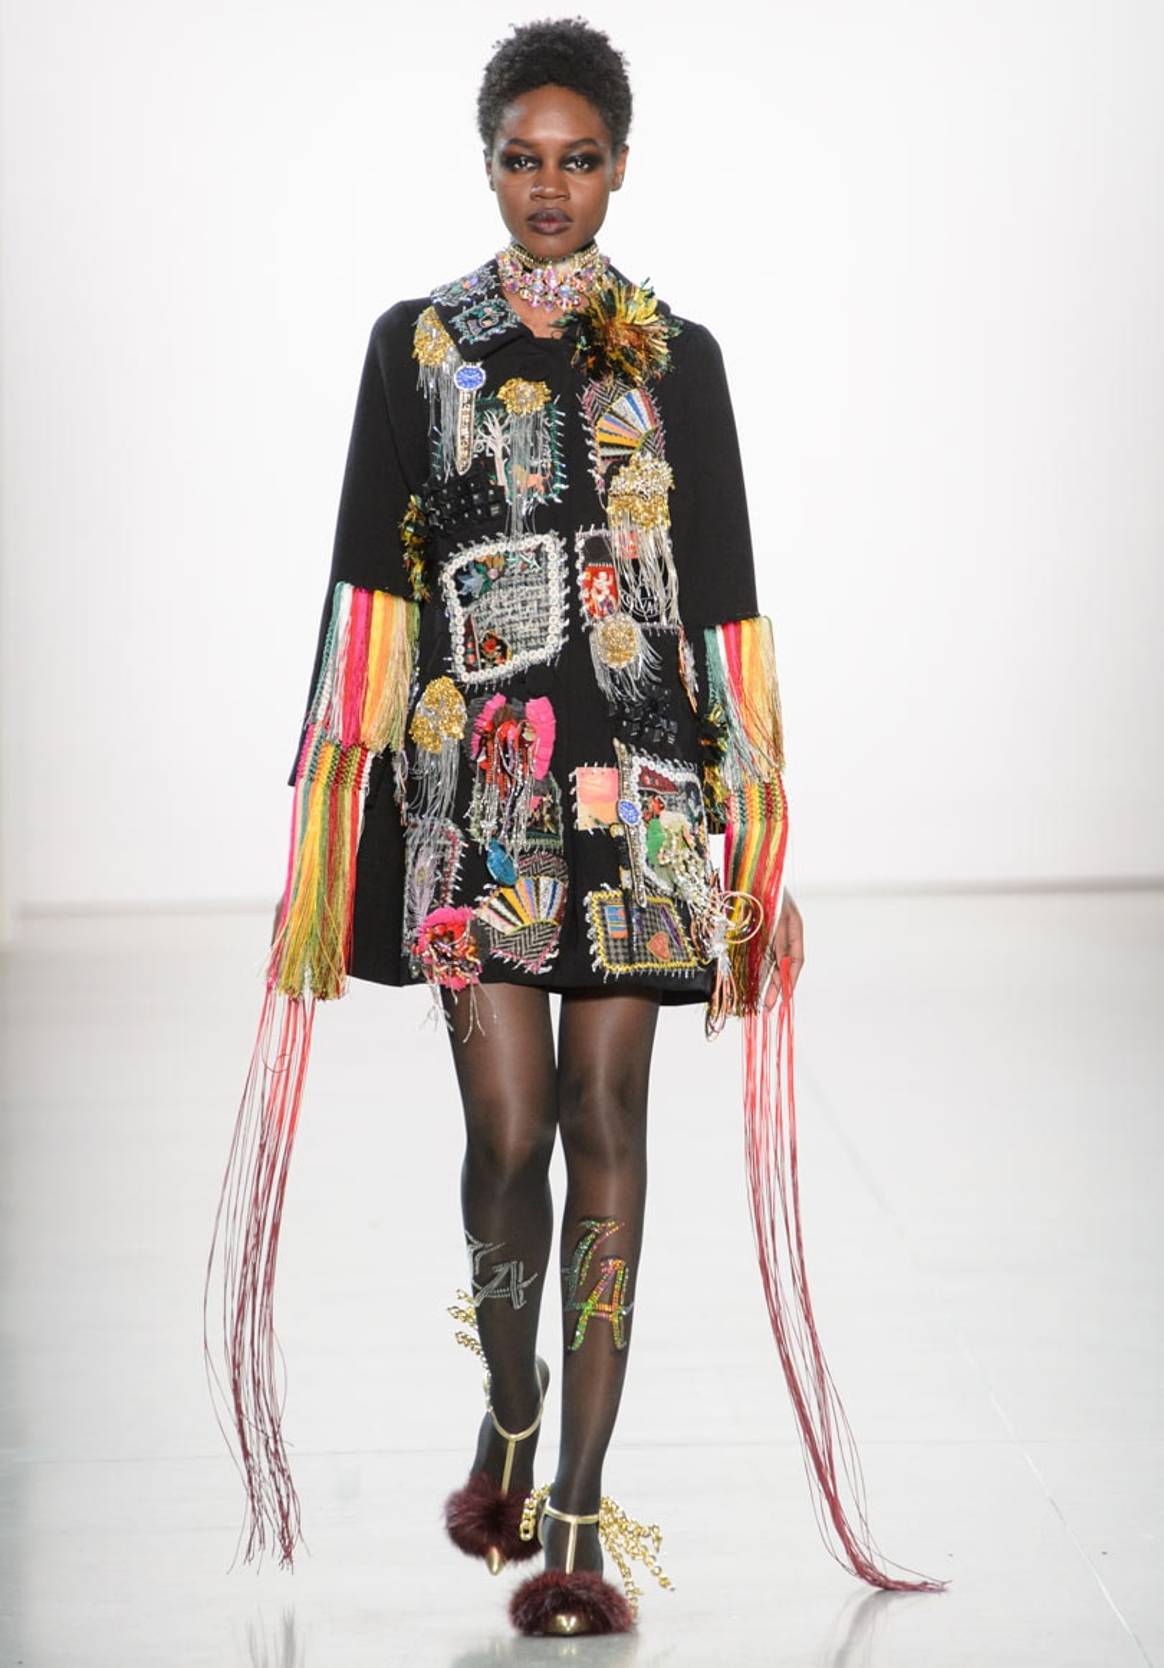 Libertine shows us dramatic ways to do black at New York Fashion Week